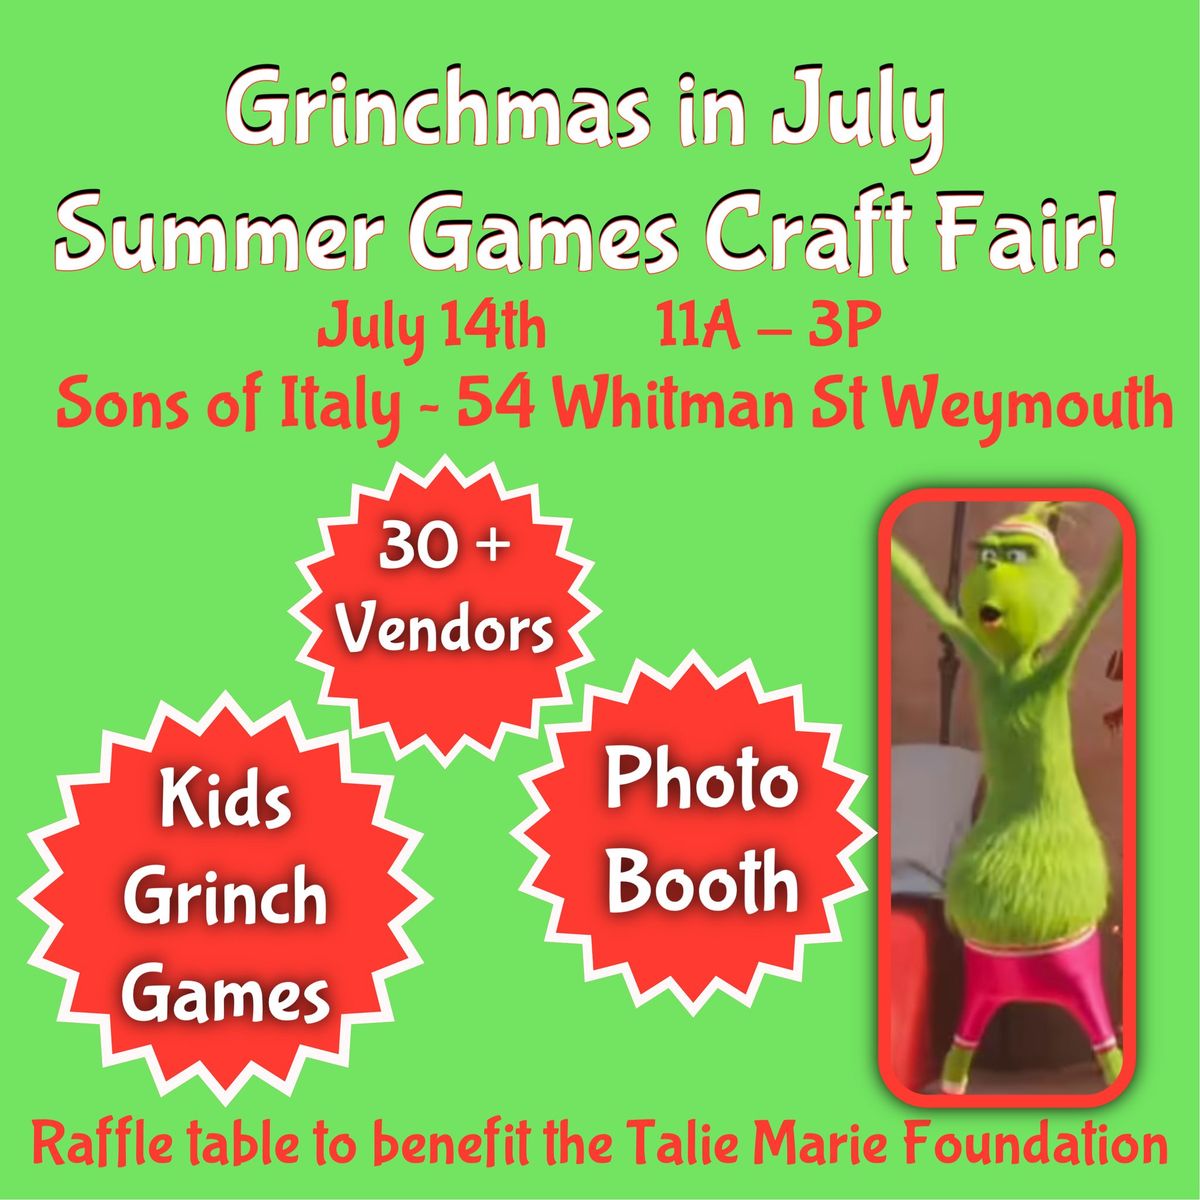 GRINCHMAS in July Summer Games Craft Fair